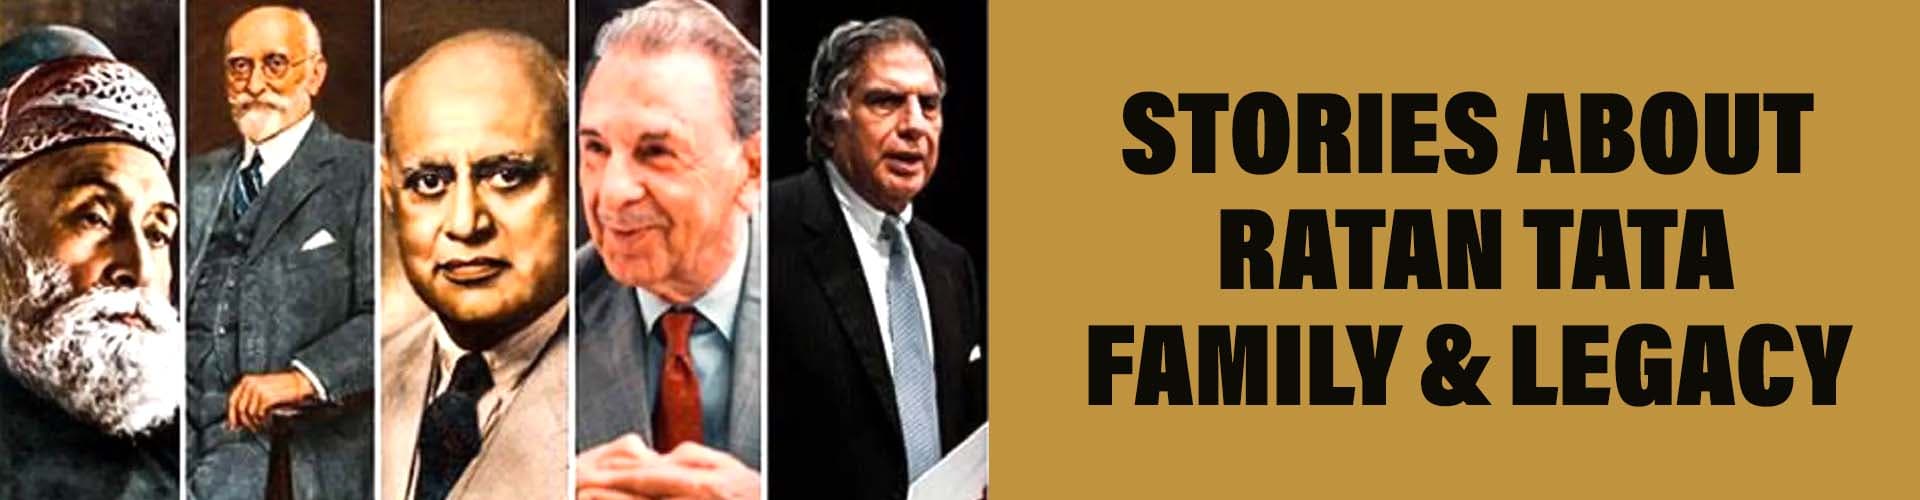 Inspiring story: The Ratan Tata Biography